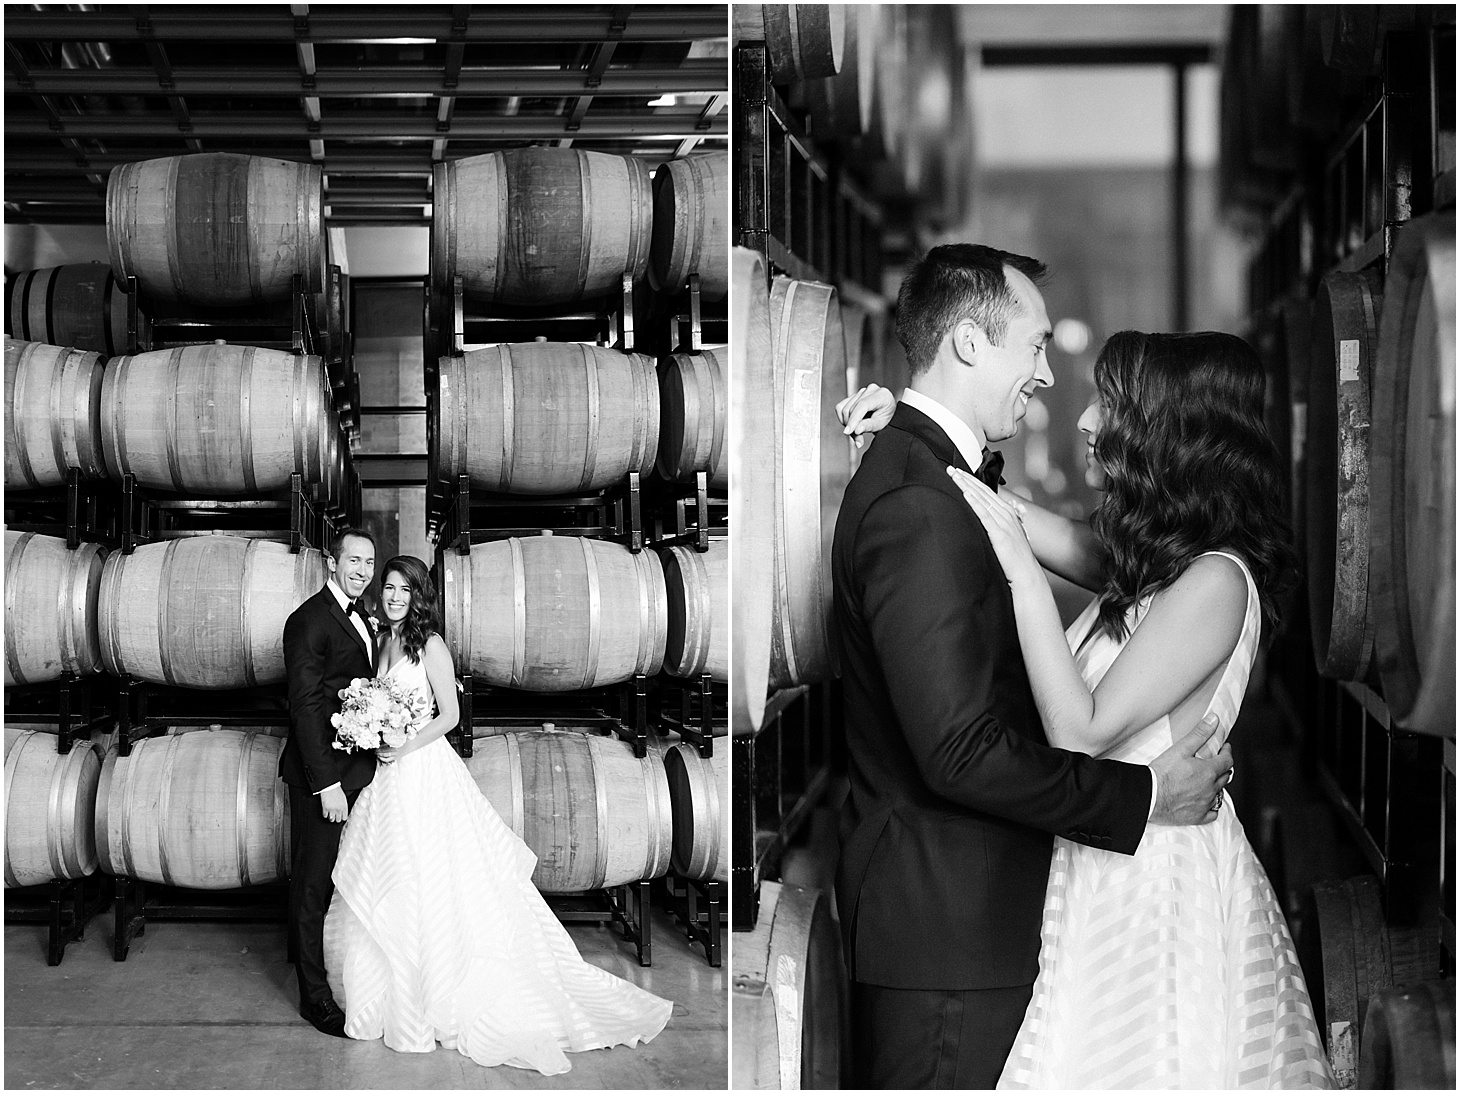 Wedding Portraits at District Winery | Chic and Modern Interfaith Wedding in Washington, DC | Sarah Bradshaw Photography